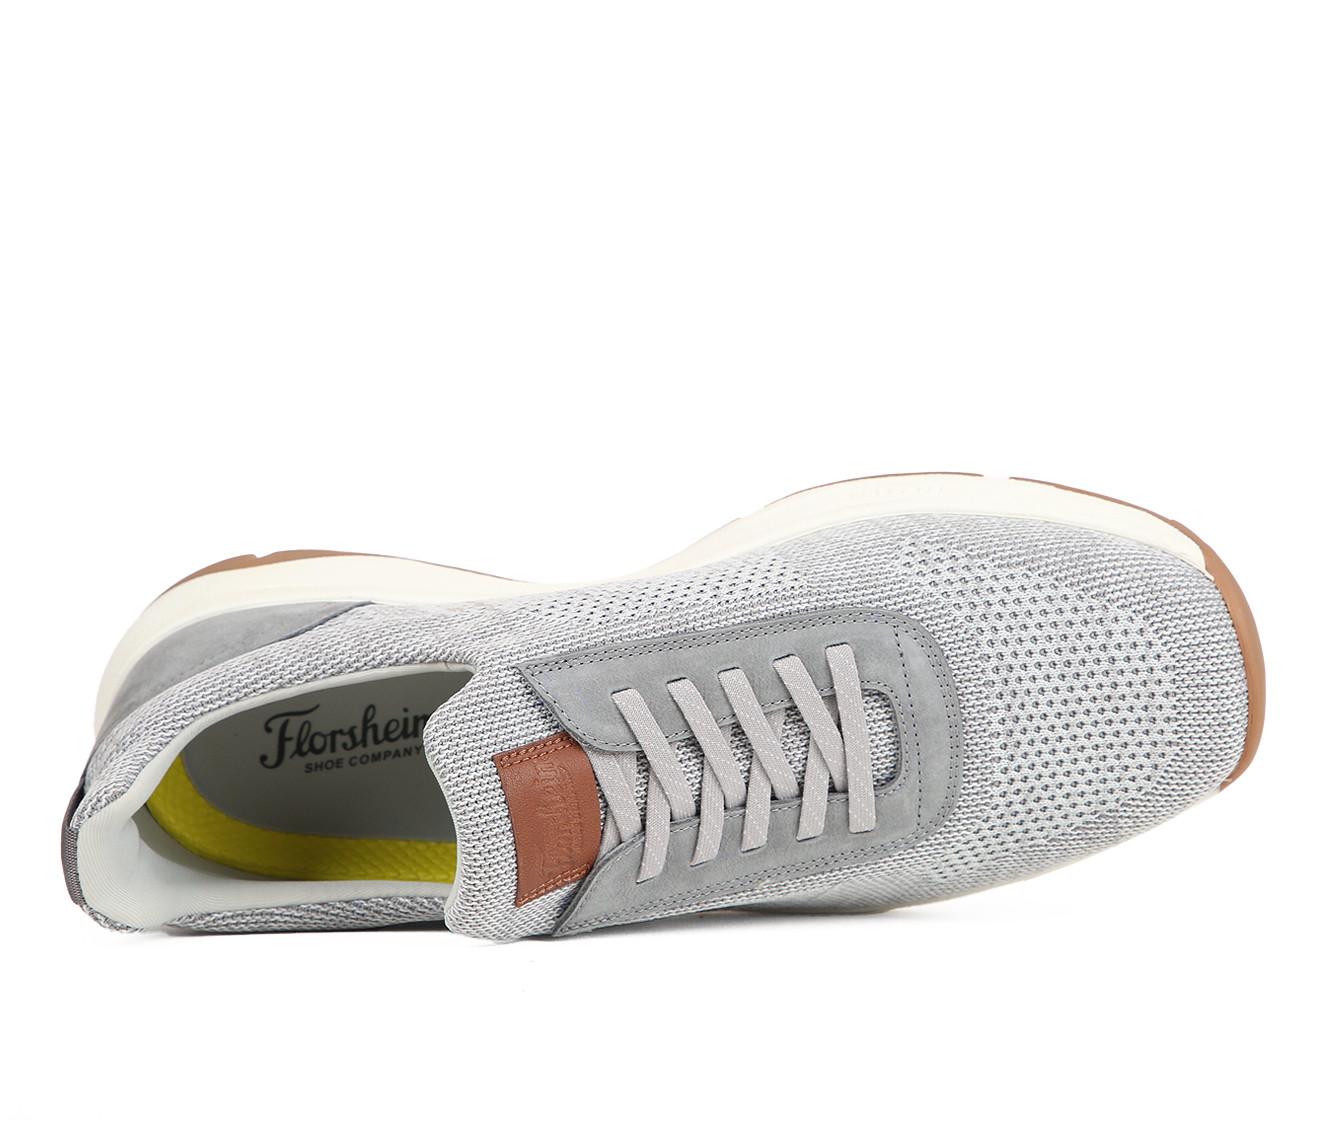 Men's Florsheim Satellite Knit Elastic Slip On Sneakers